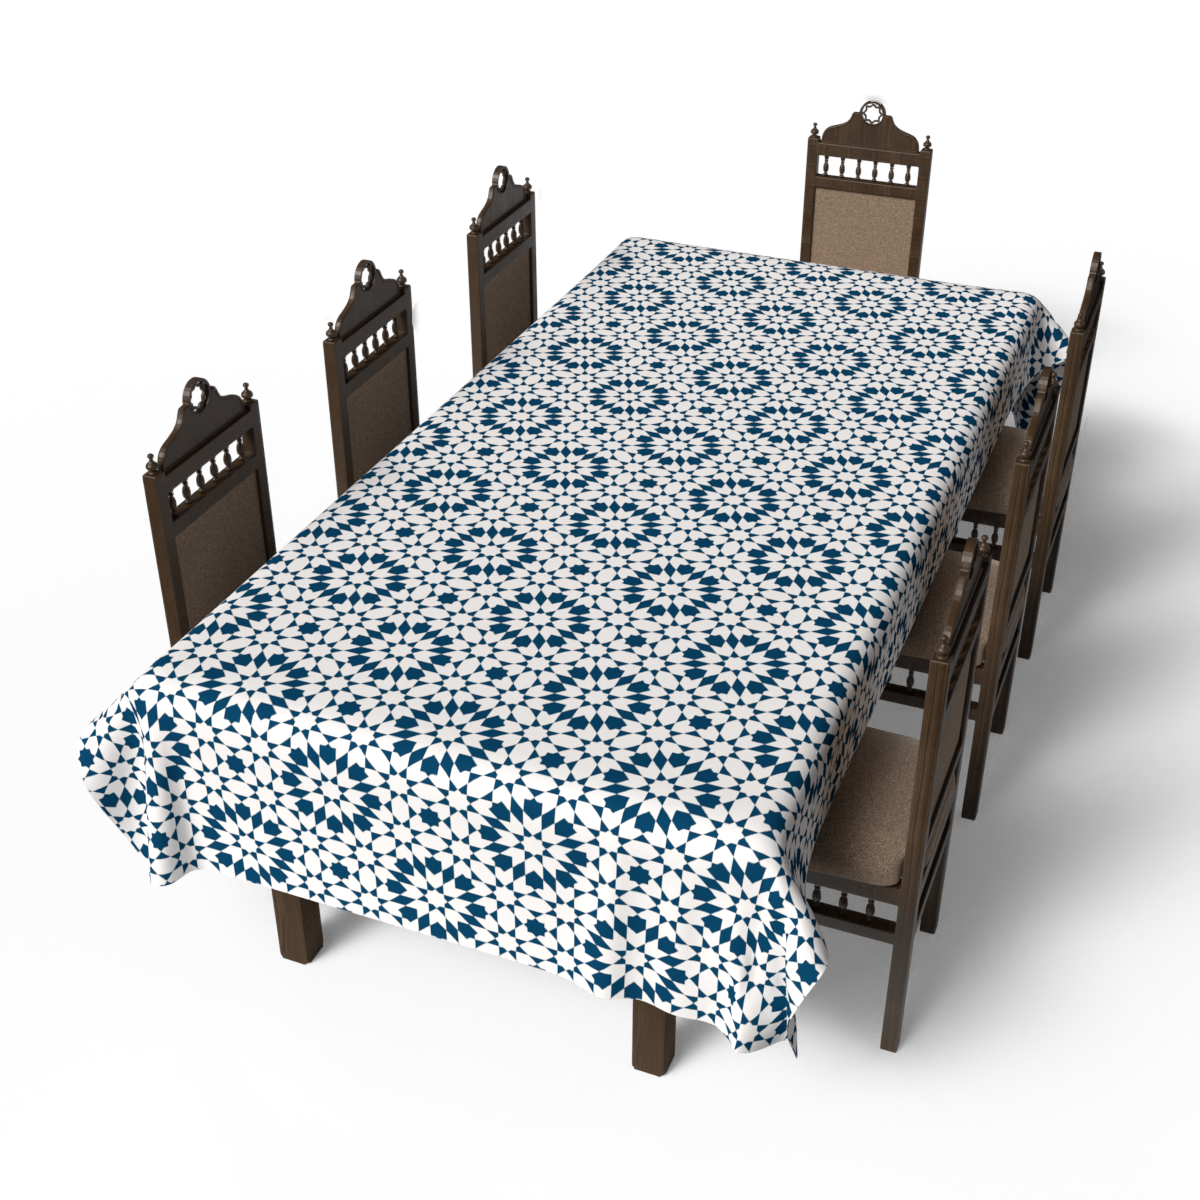 Topaz Tablecloth